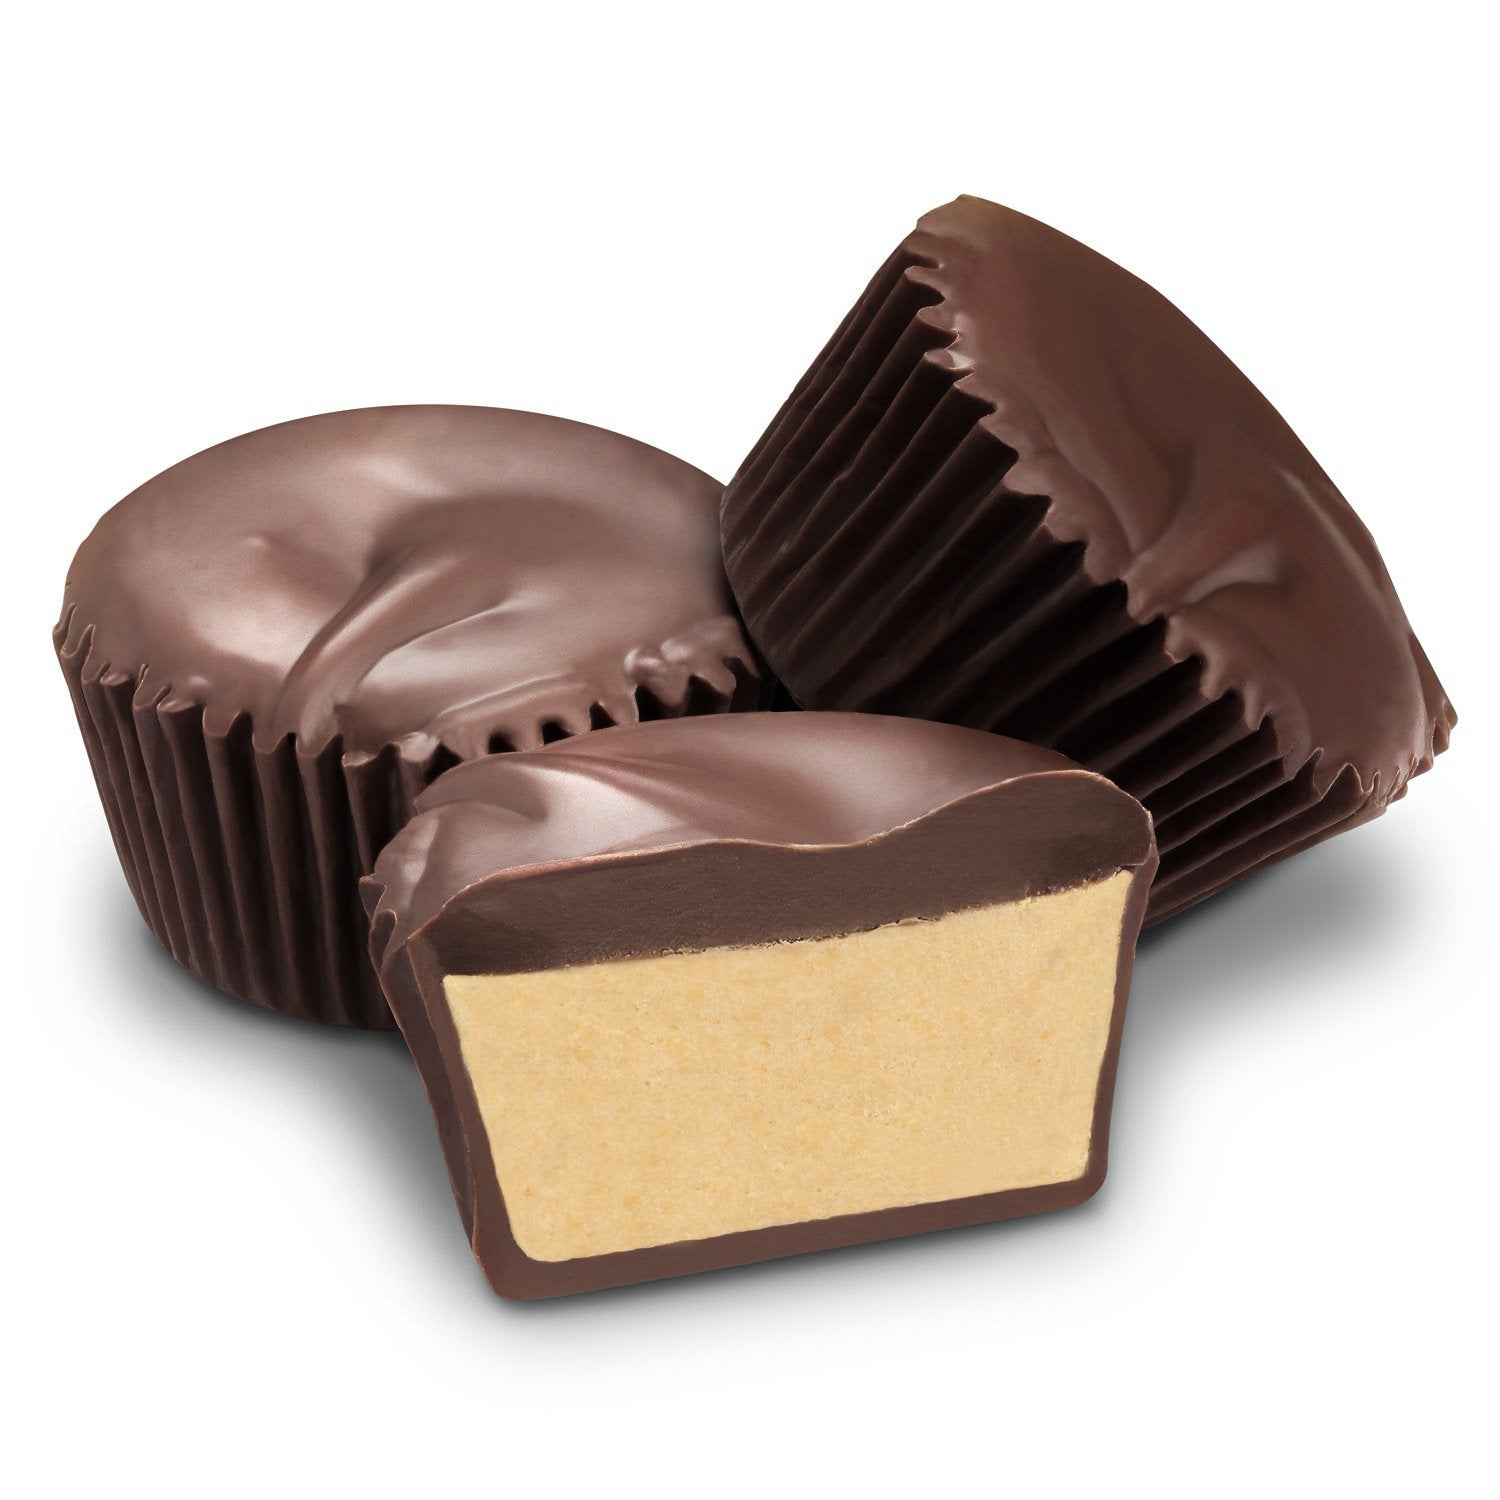 dark chocolate peanut butter m&ms